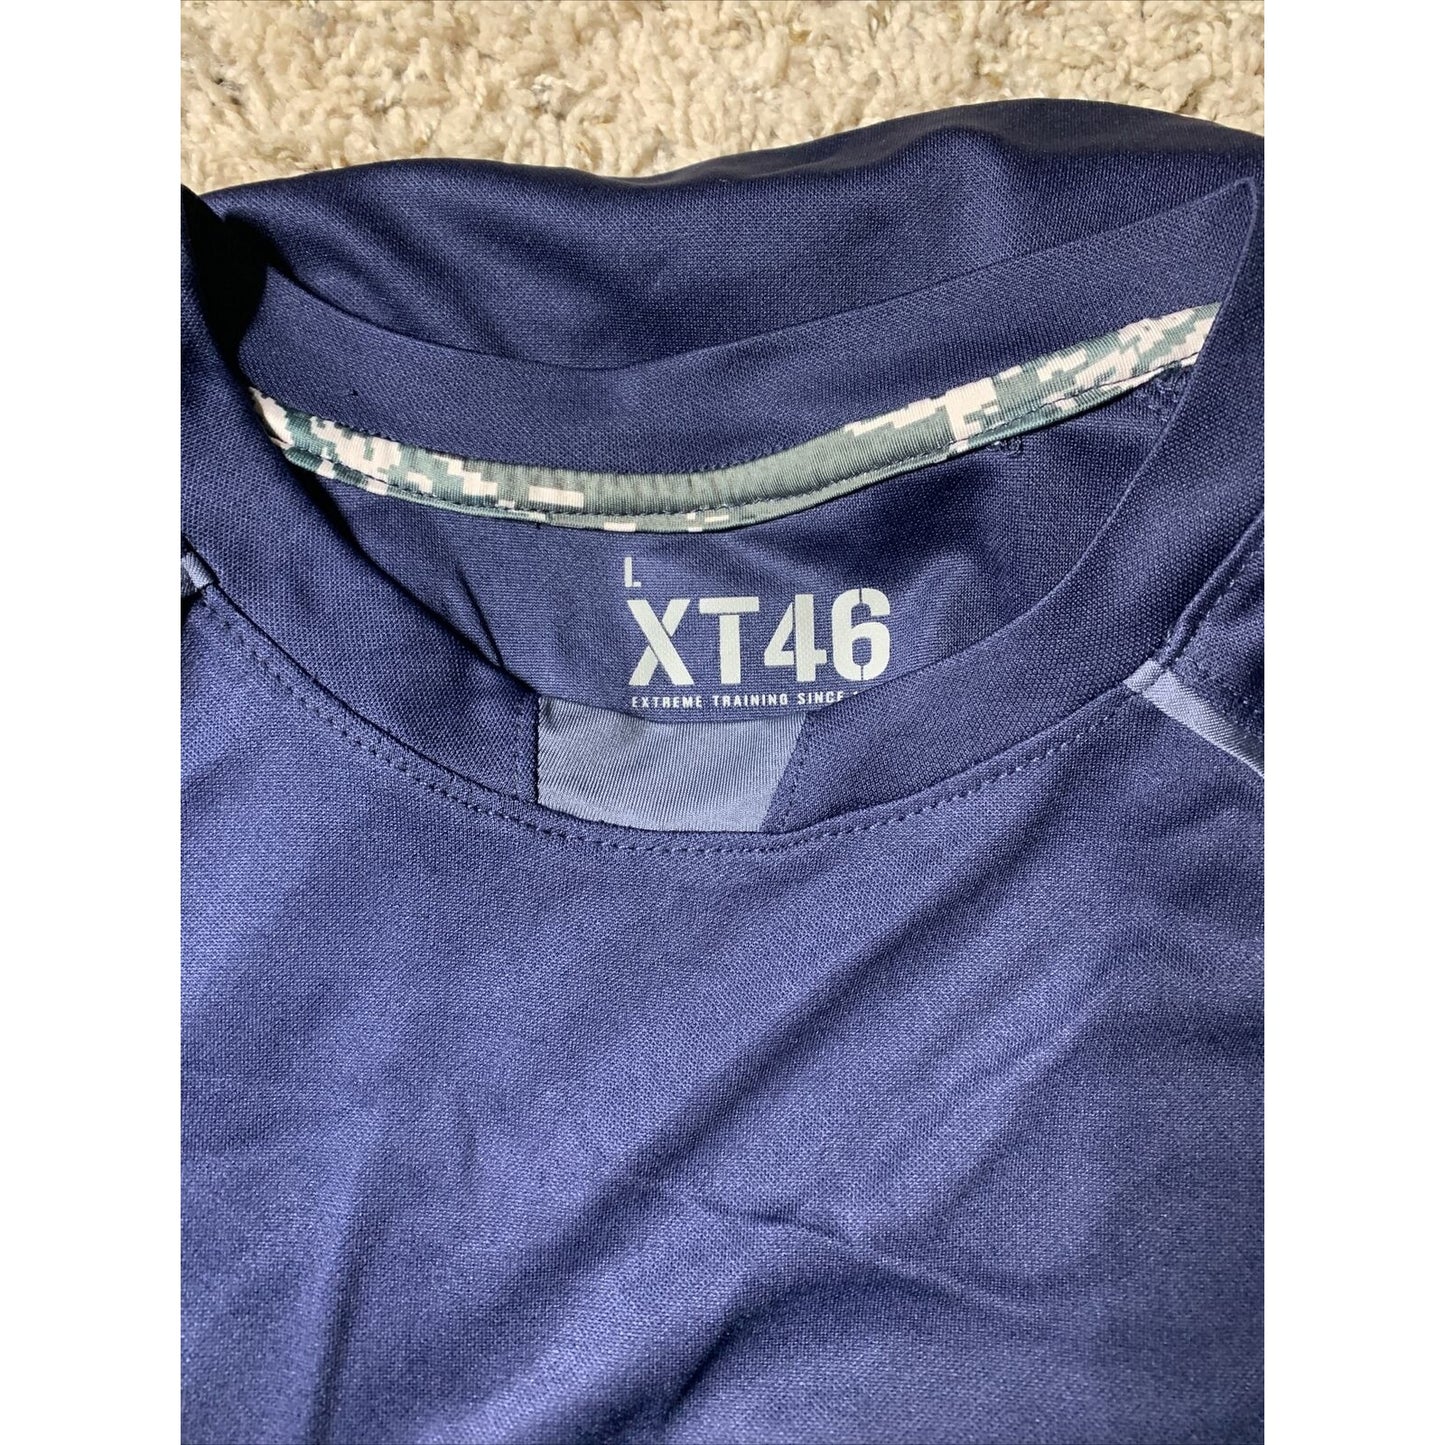 Men’s Soffe XT46 Navy Blue Camo Large Tee 100% Polyester